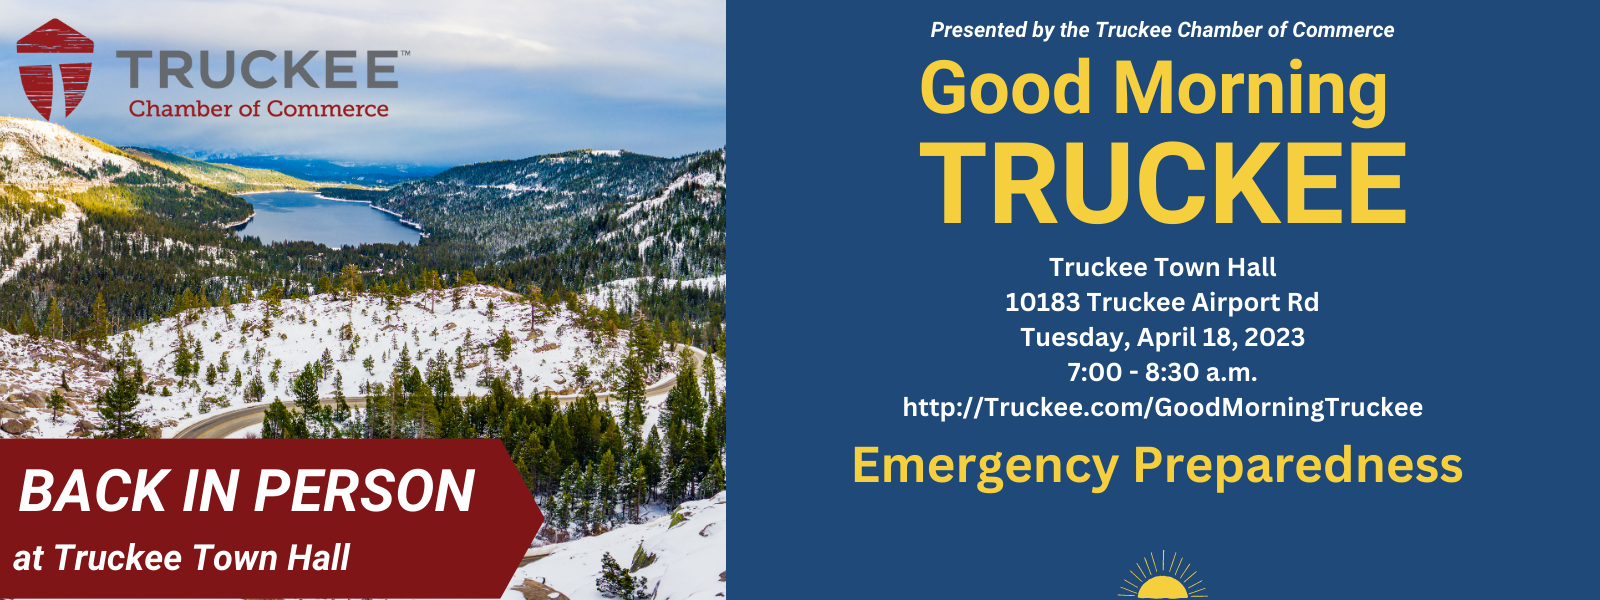 April 18, 2023 - Good Morning Truckee: Emergency Preparedness